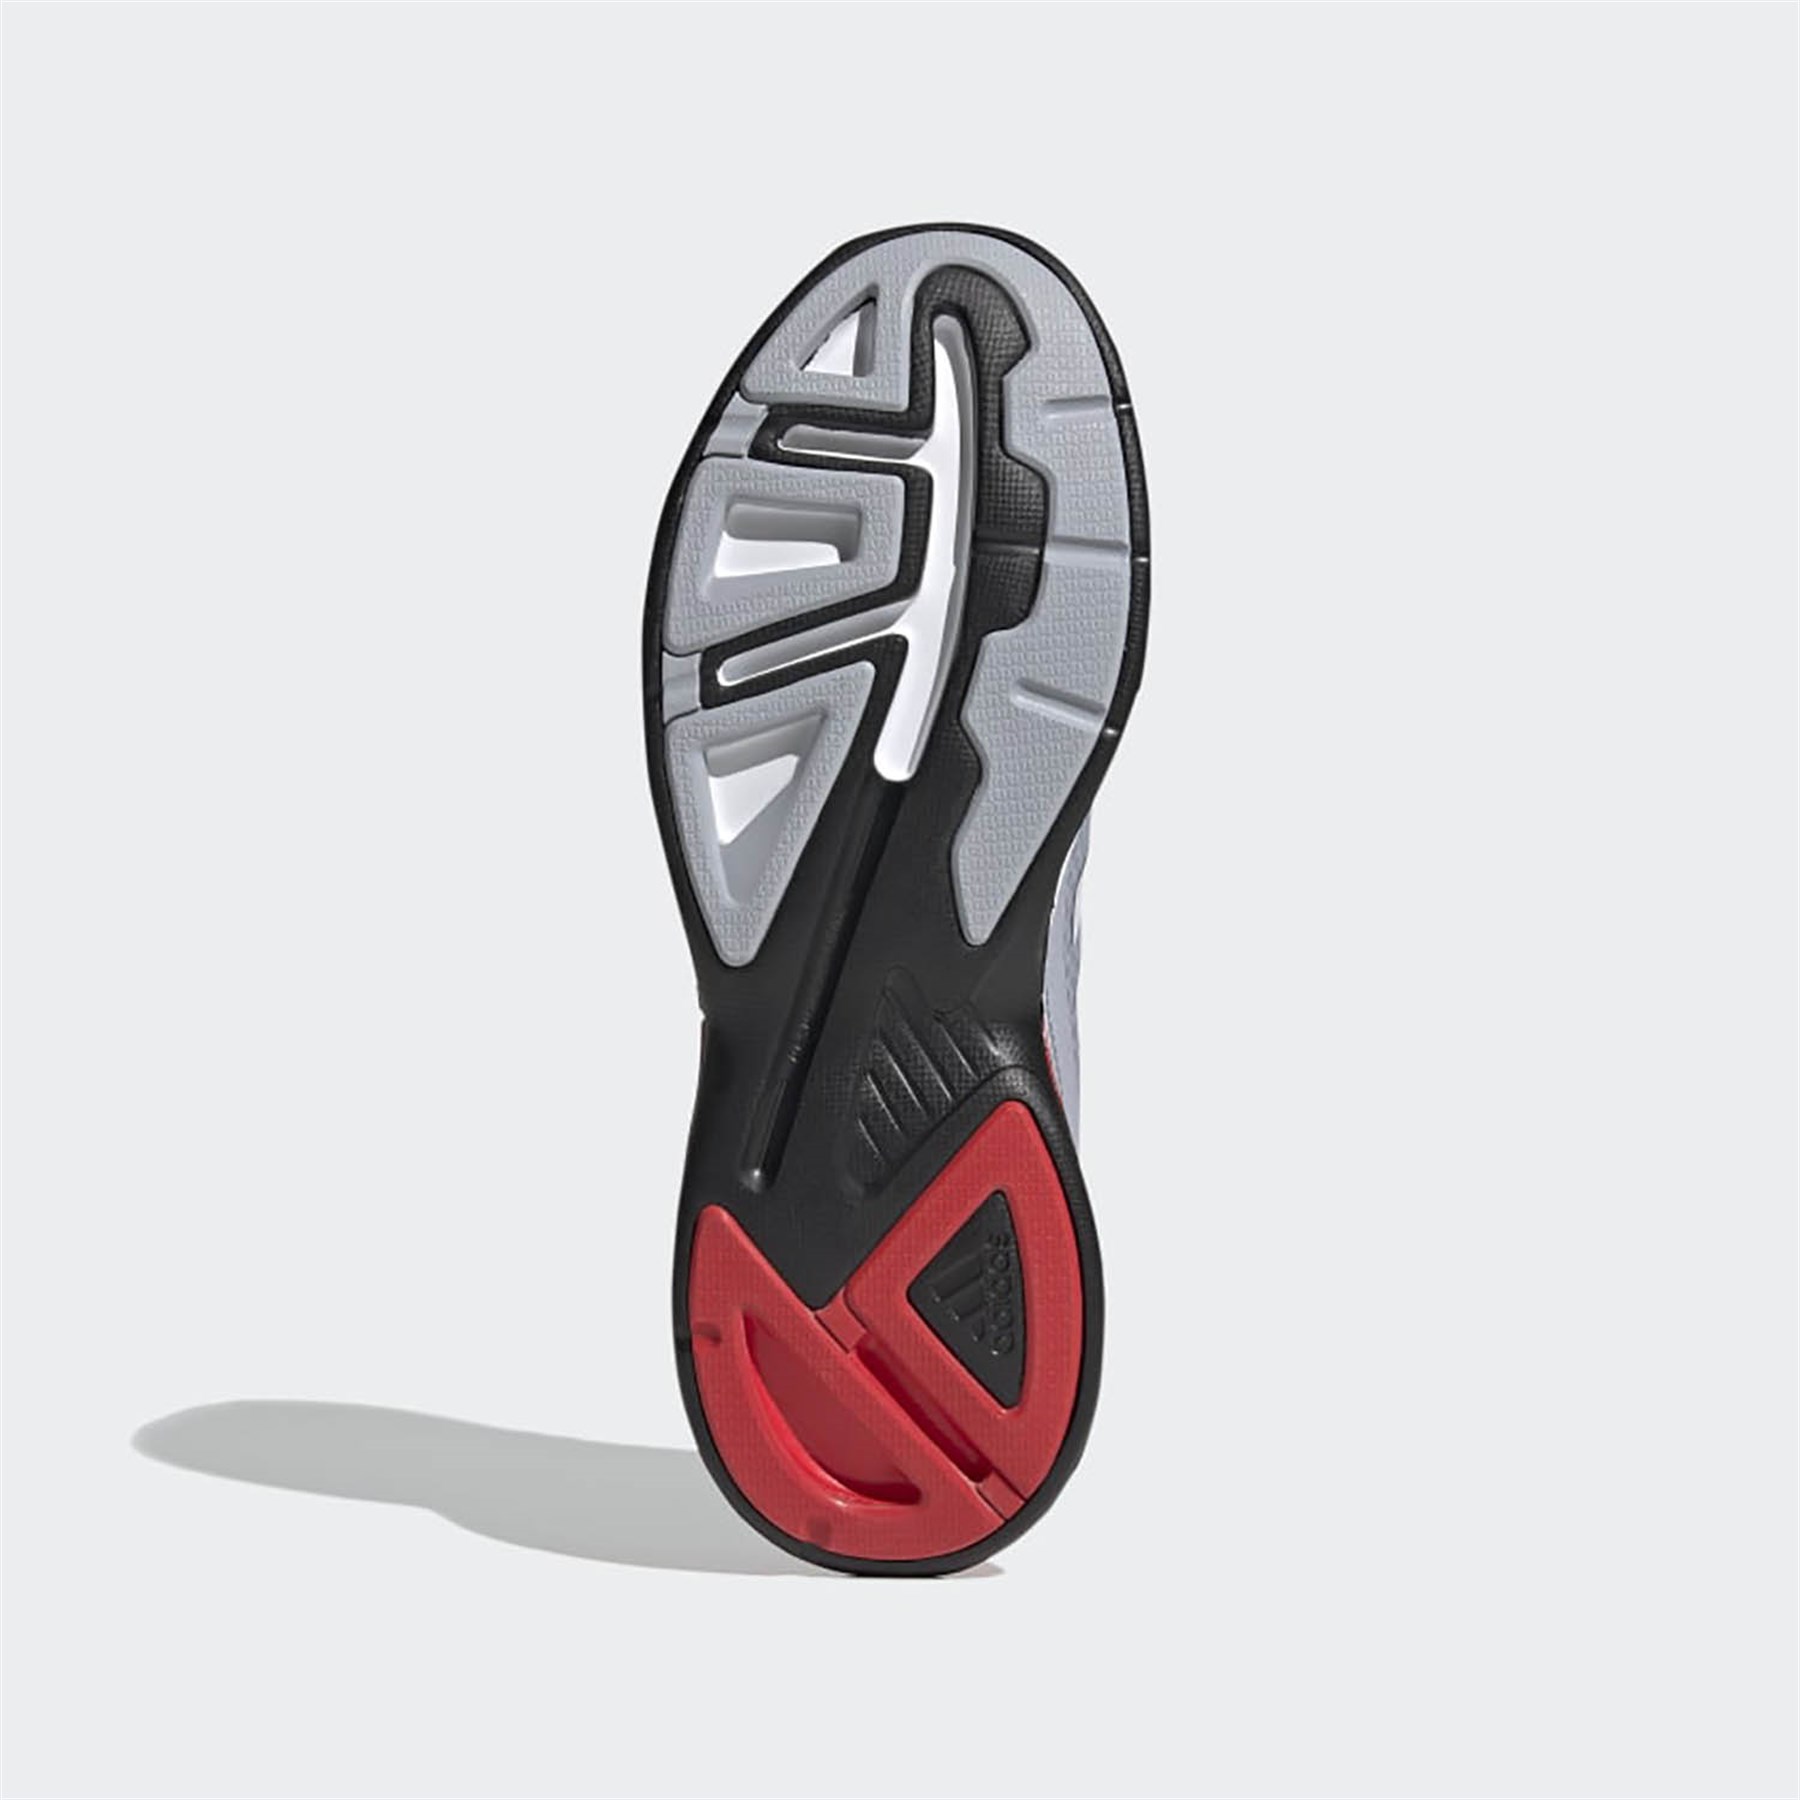 Adidas Erkek Koşu - Yürüyüş Ayakkabı Response Sr Fy9152 RESPONSE SR